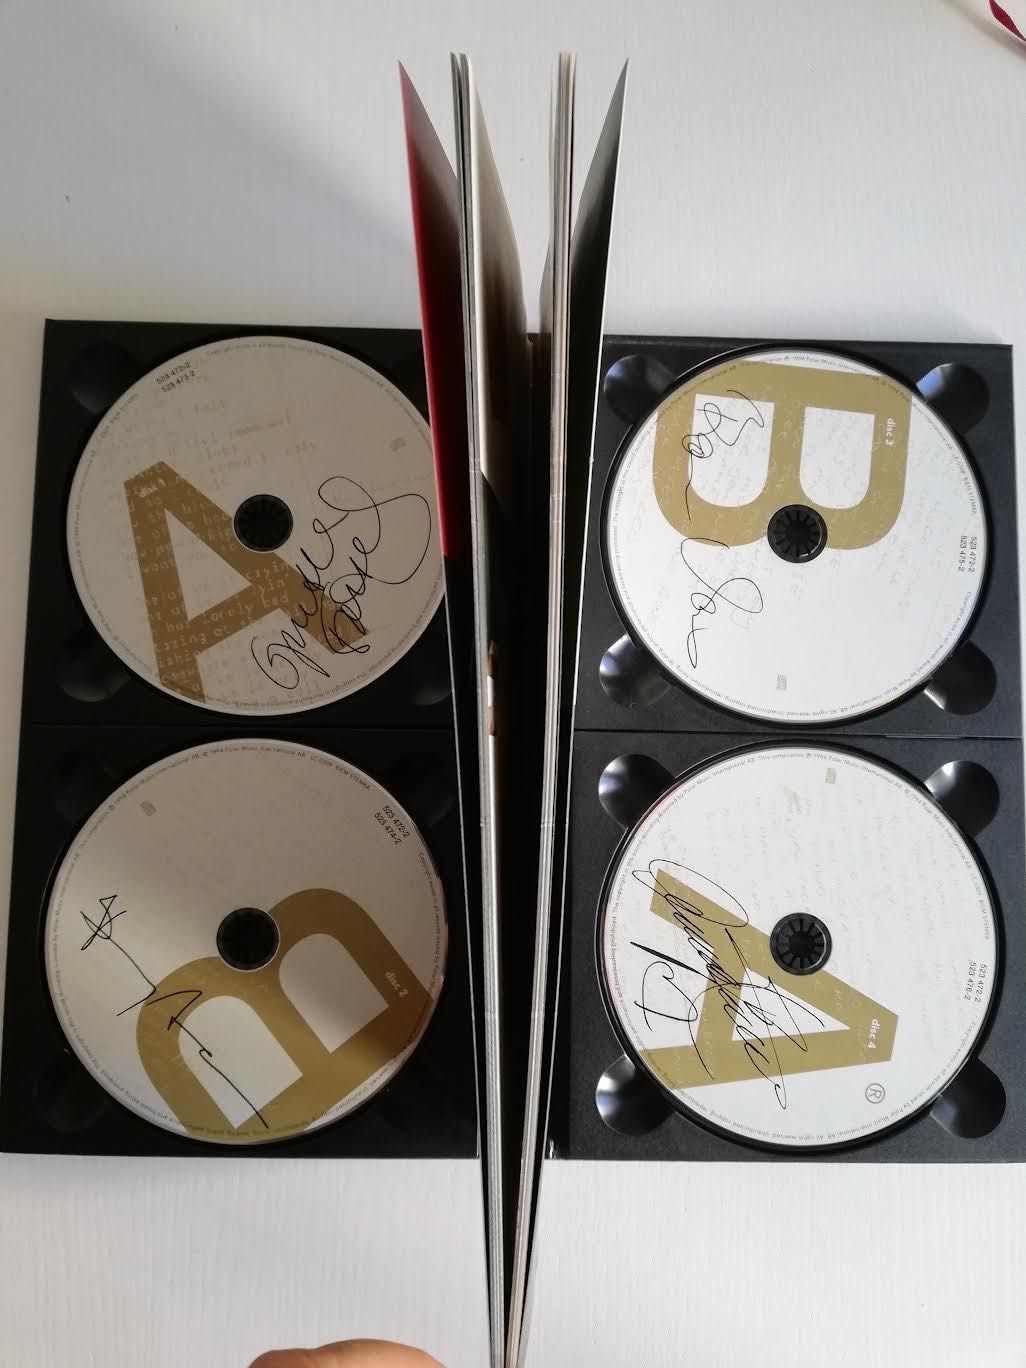 Abba - Thank You For The Music (CD Box com 4 CDs+ livro)